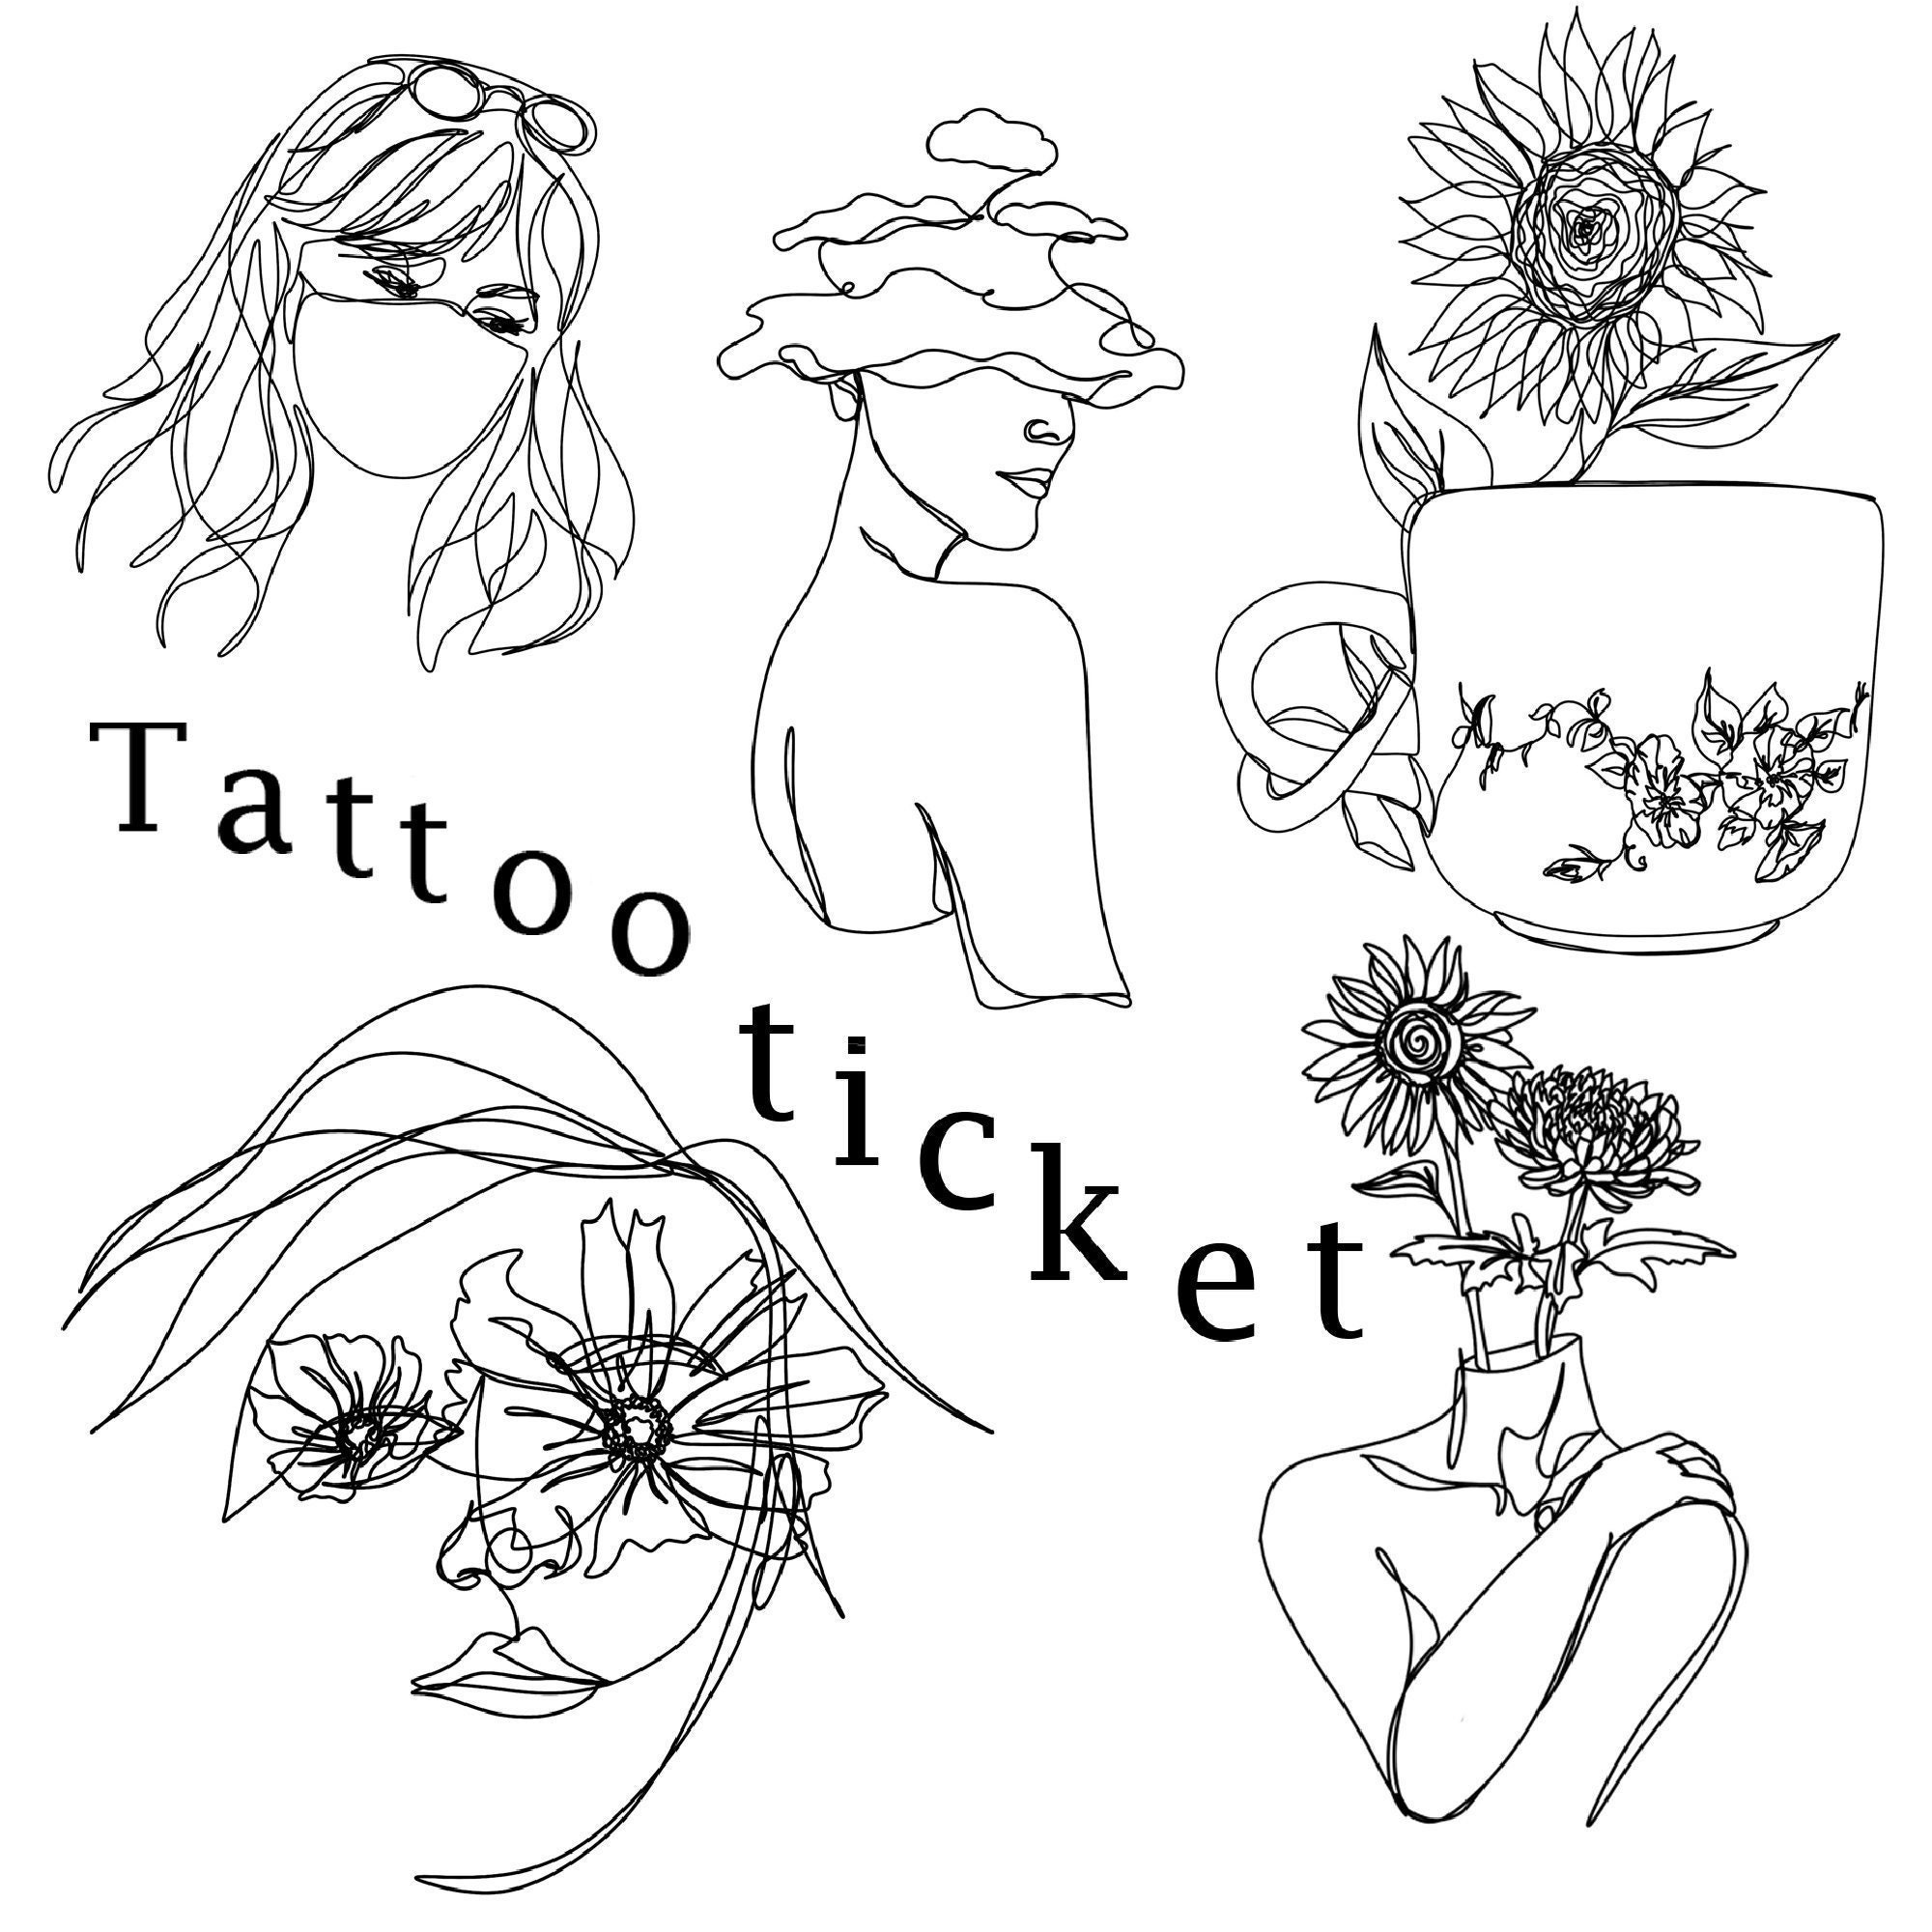 Tattoo Ticket Permission to Get My Artwork Tattooed. - Etsy Australia